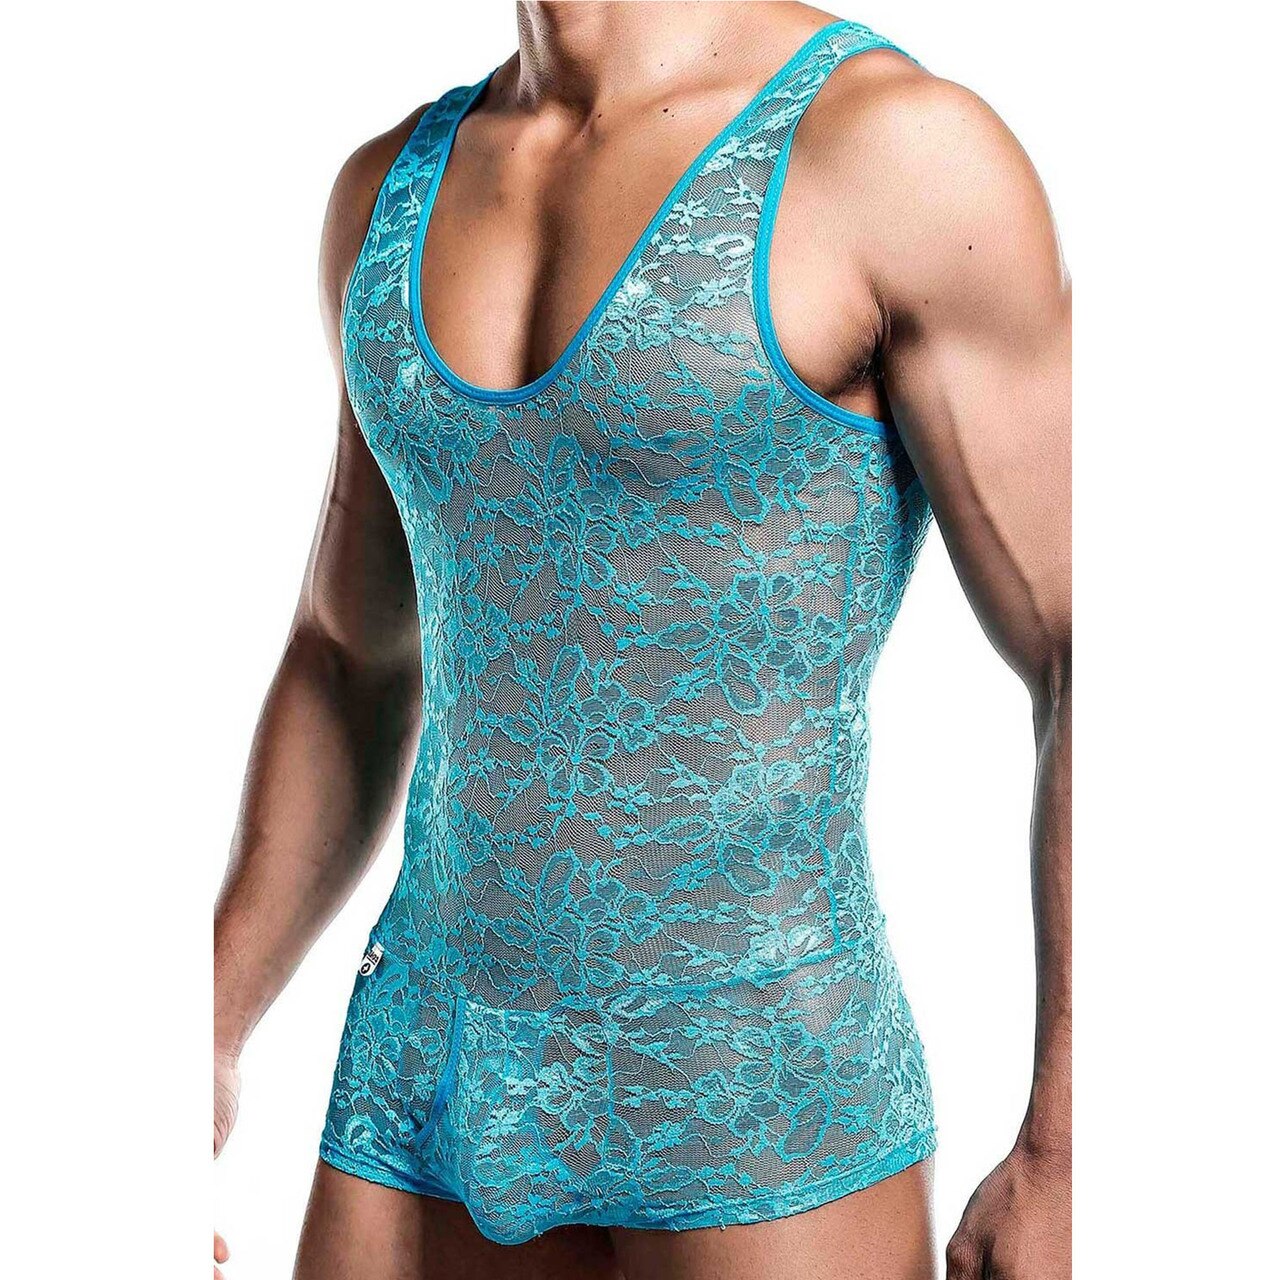 Male Basics Mens Lace Bodysuit Turquoise